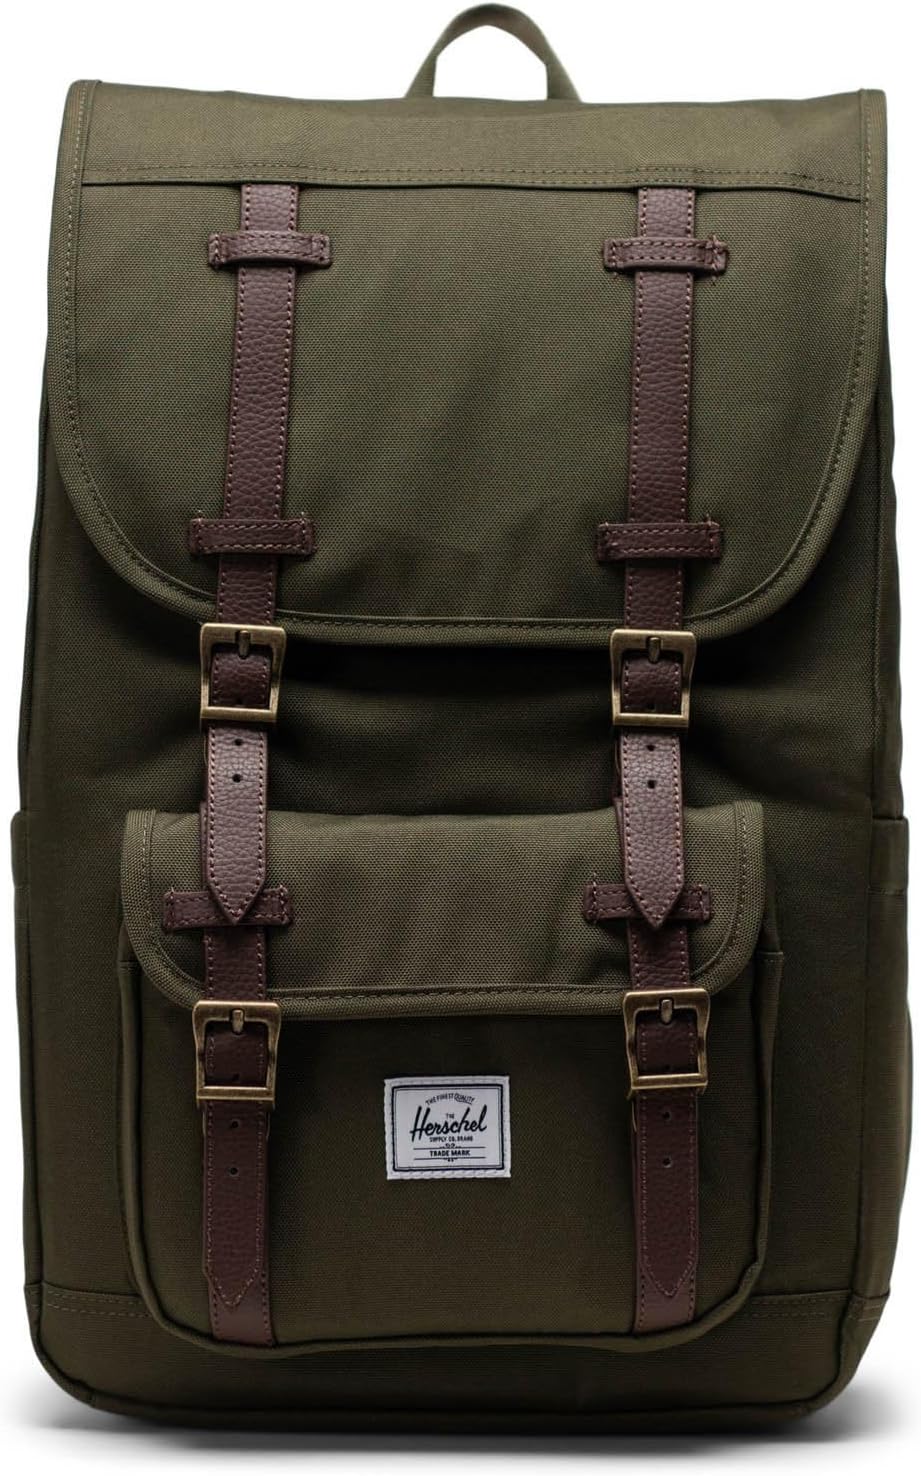 рюкзак retreat backpack herschel supply co цвет ivy green Рюкзак Little America Mid Backpack Herschel Supply Co., цвет Ivy Green